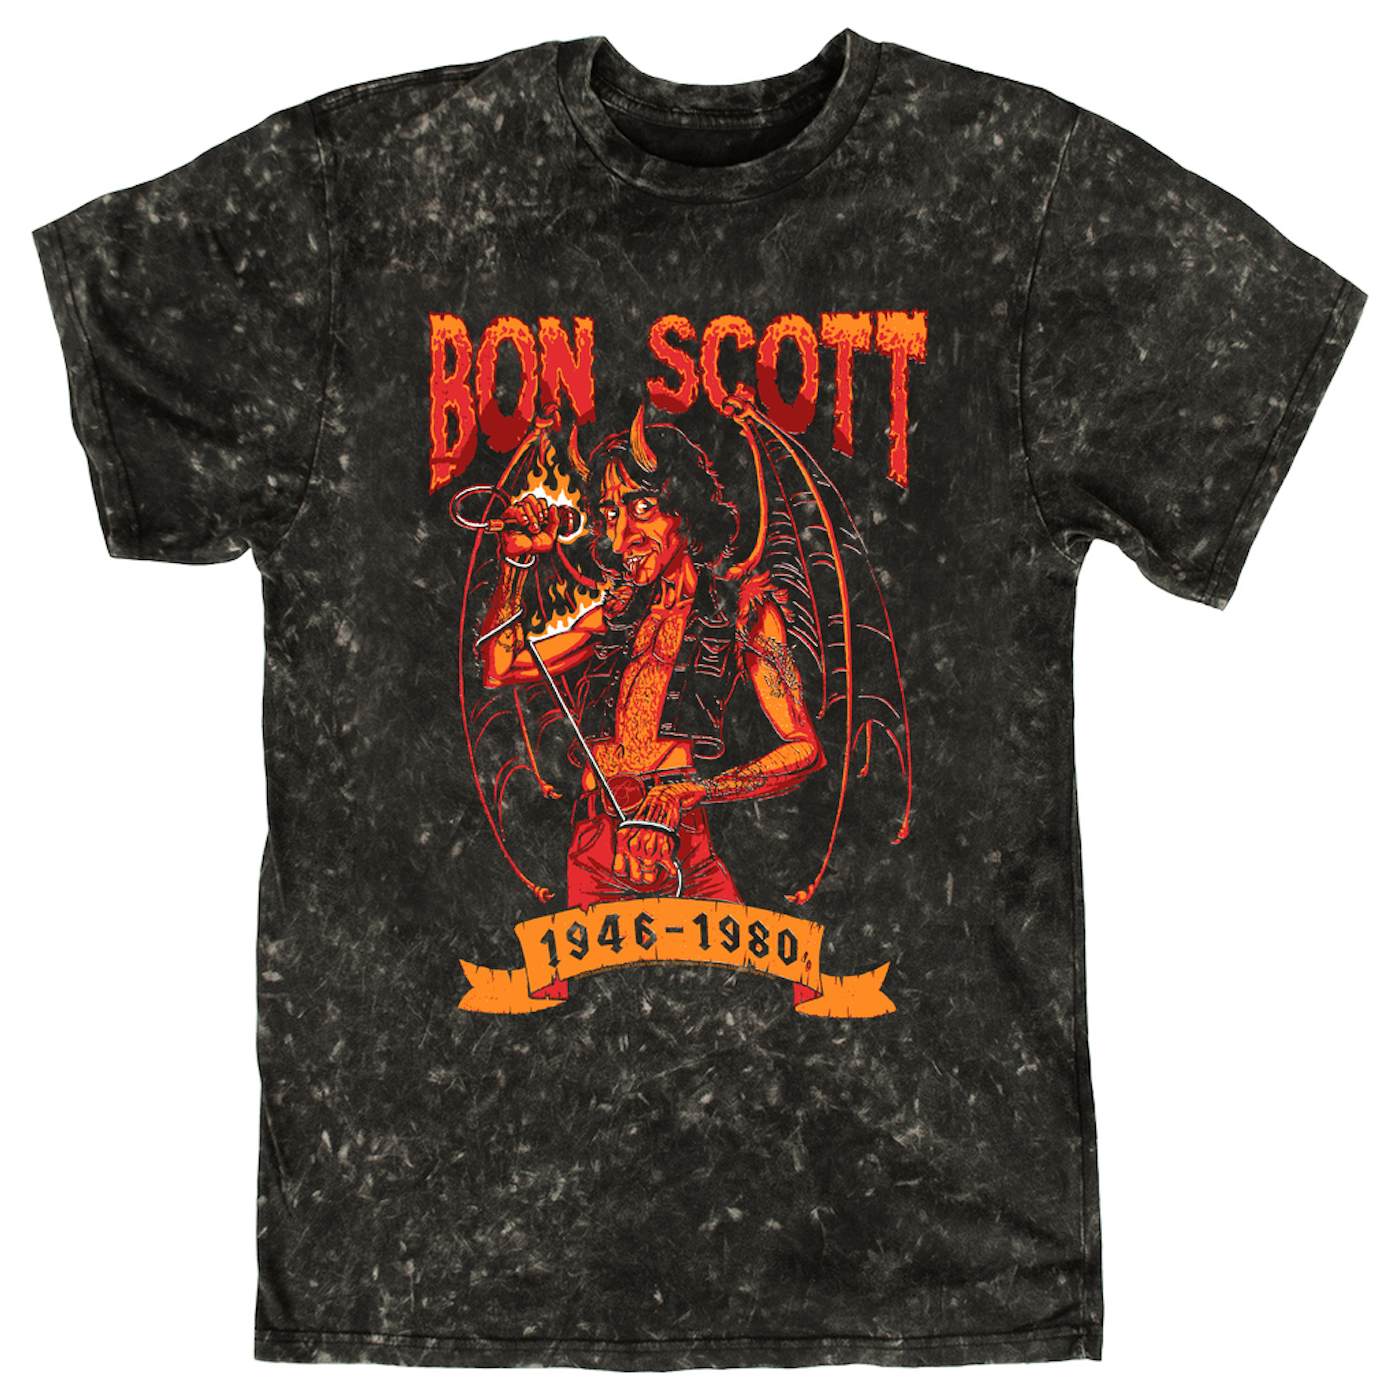 Bon Scott T-shirt | Devilishly Rock 1946-1980 Bon Scott Mineral Wash Shirt